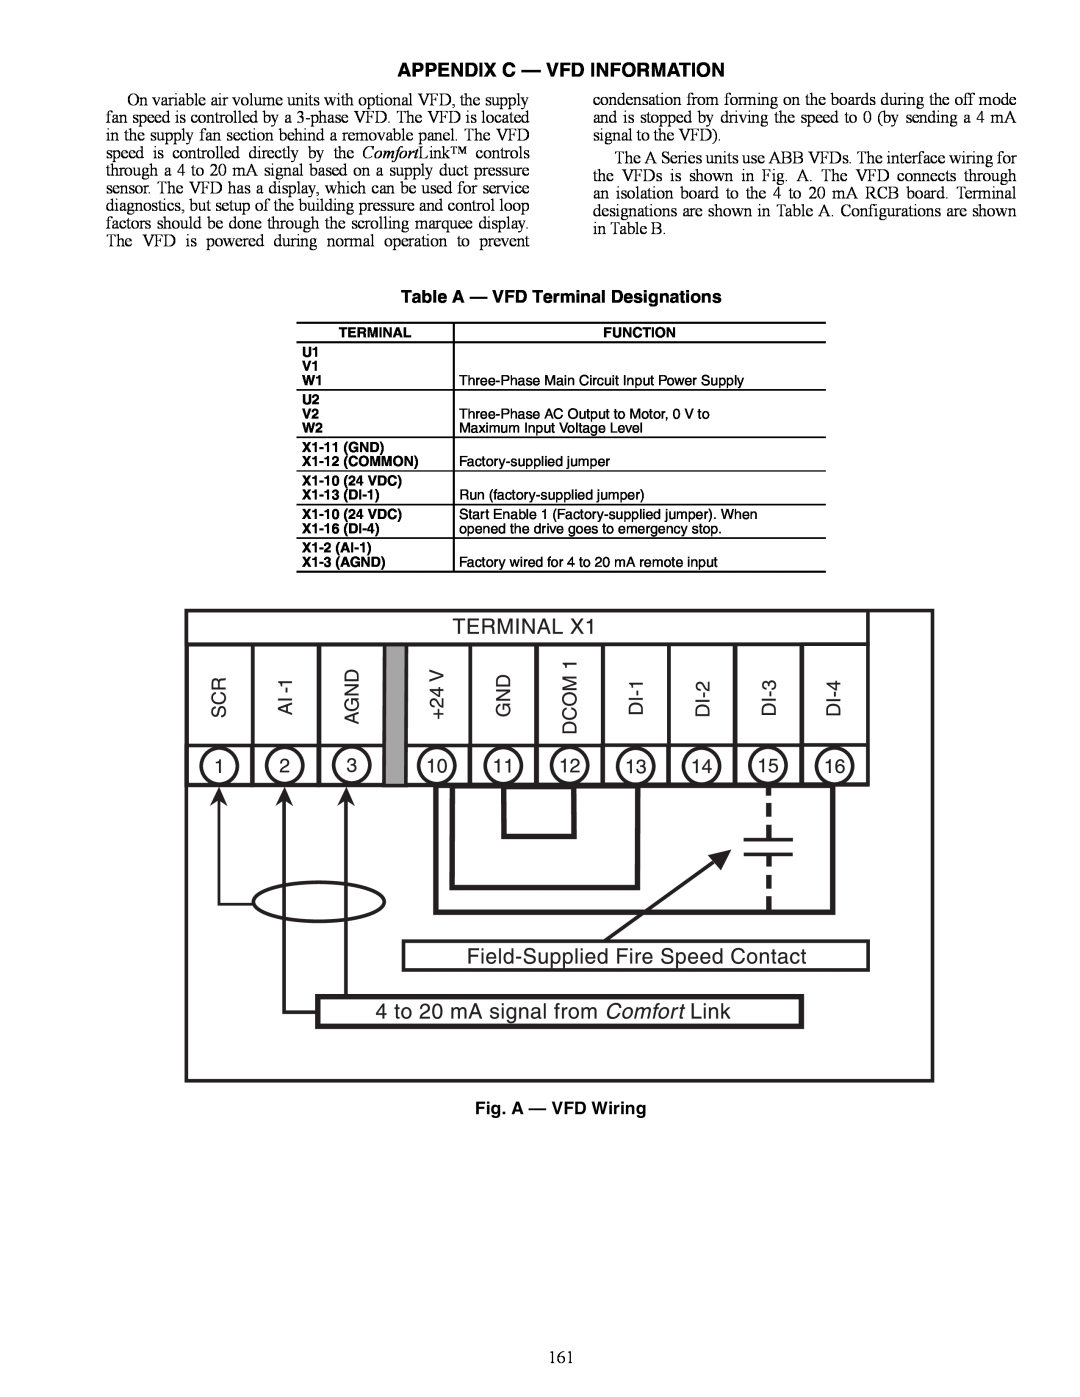 Carrier 48/50AJ specifications Appendix C - Vfd Information, Table A — VFD Terminal Designations, Fig. A — VFD Wiring 